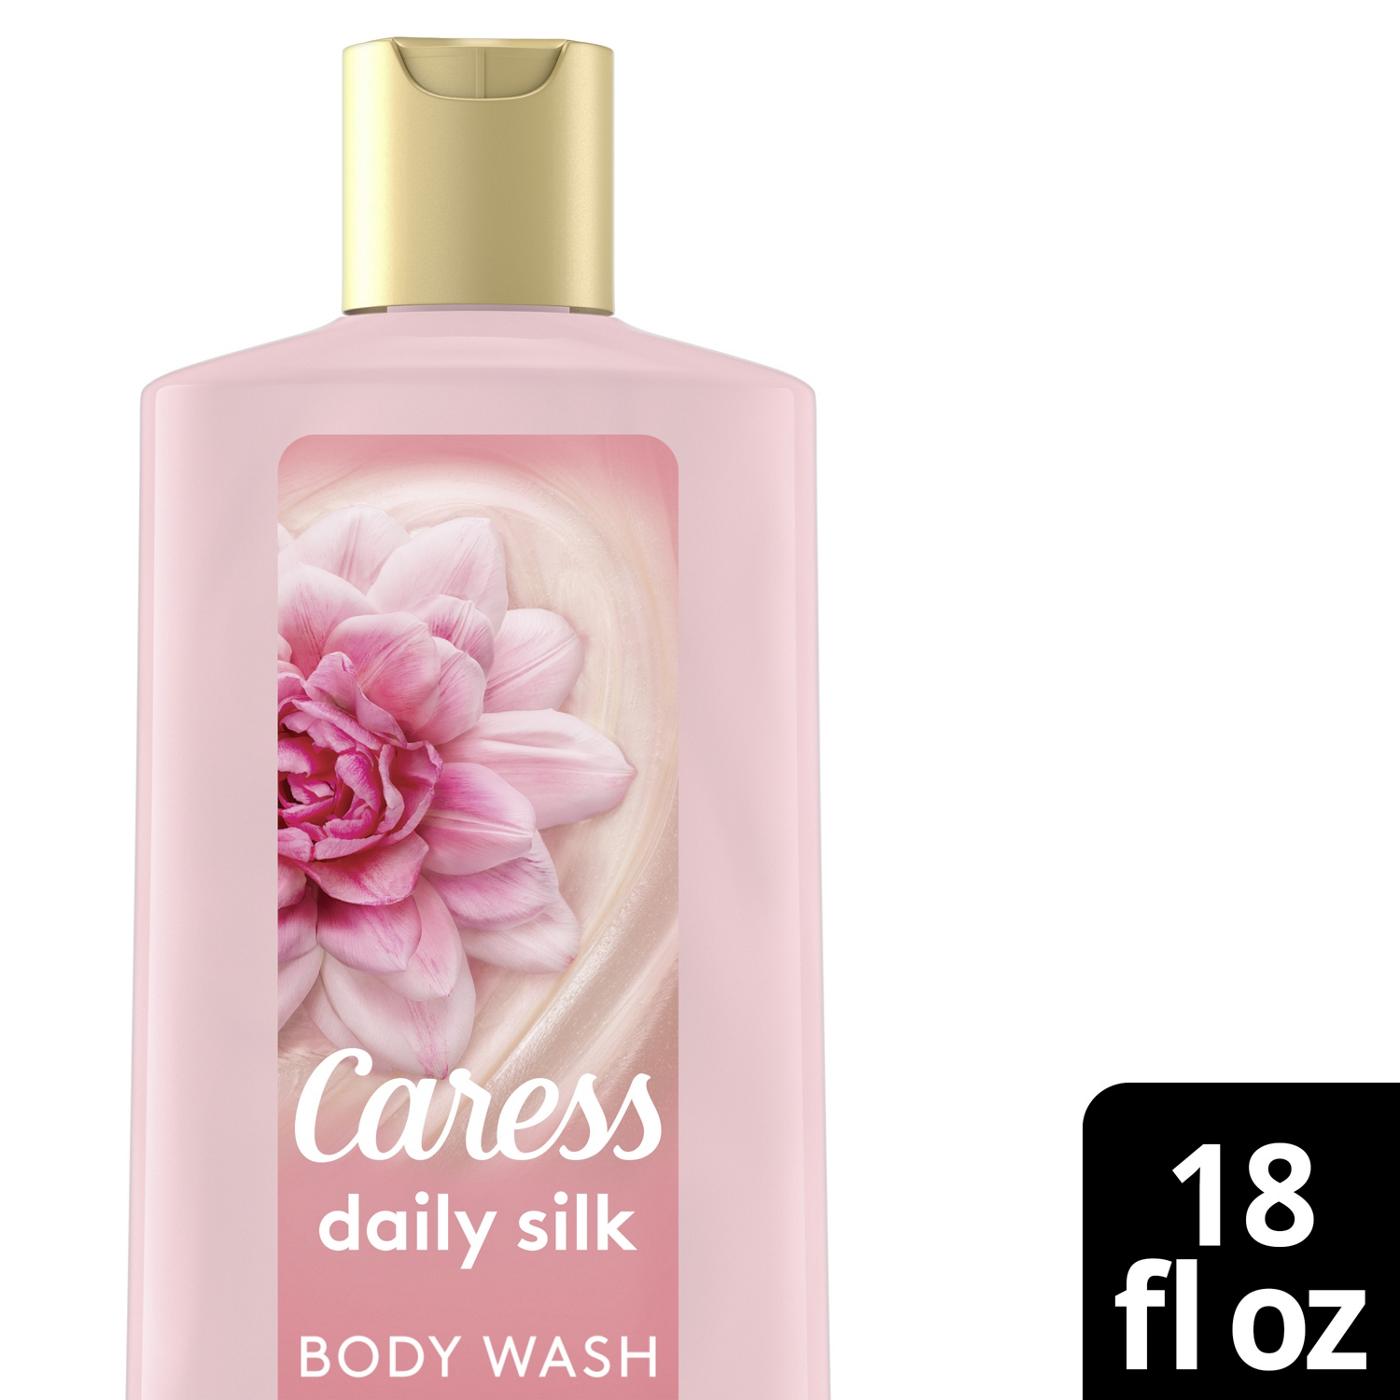 Caress Daily Silk Body Wash - White Peach & Orange Blossom; image 2 of 7